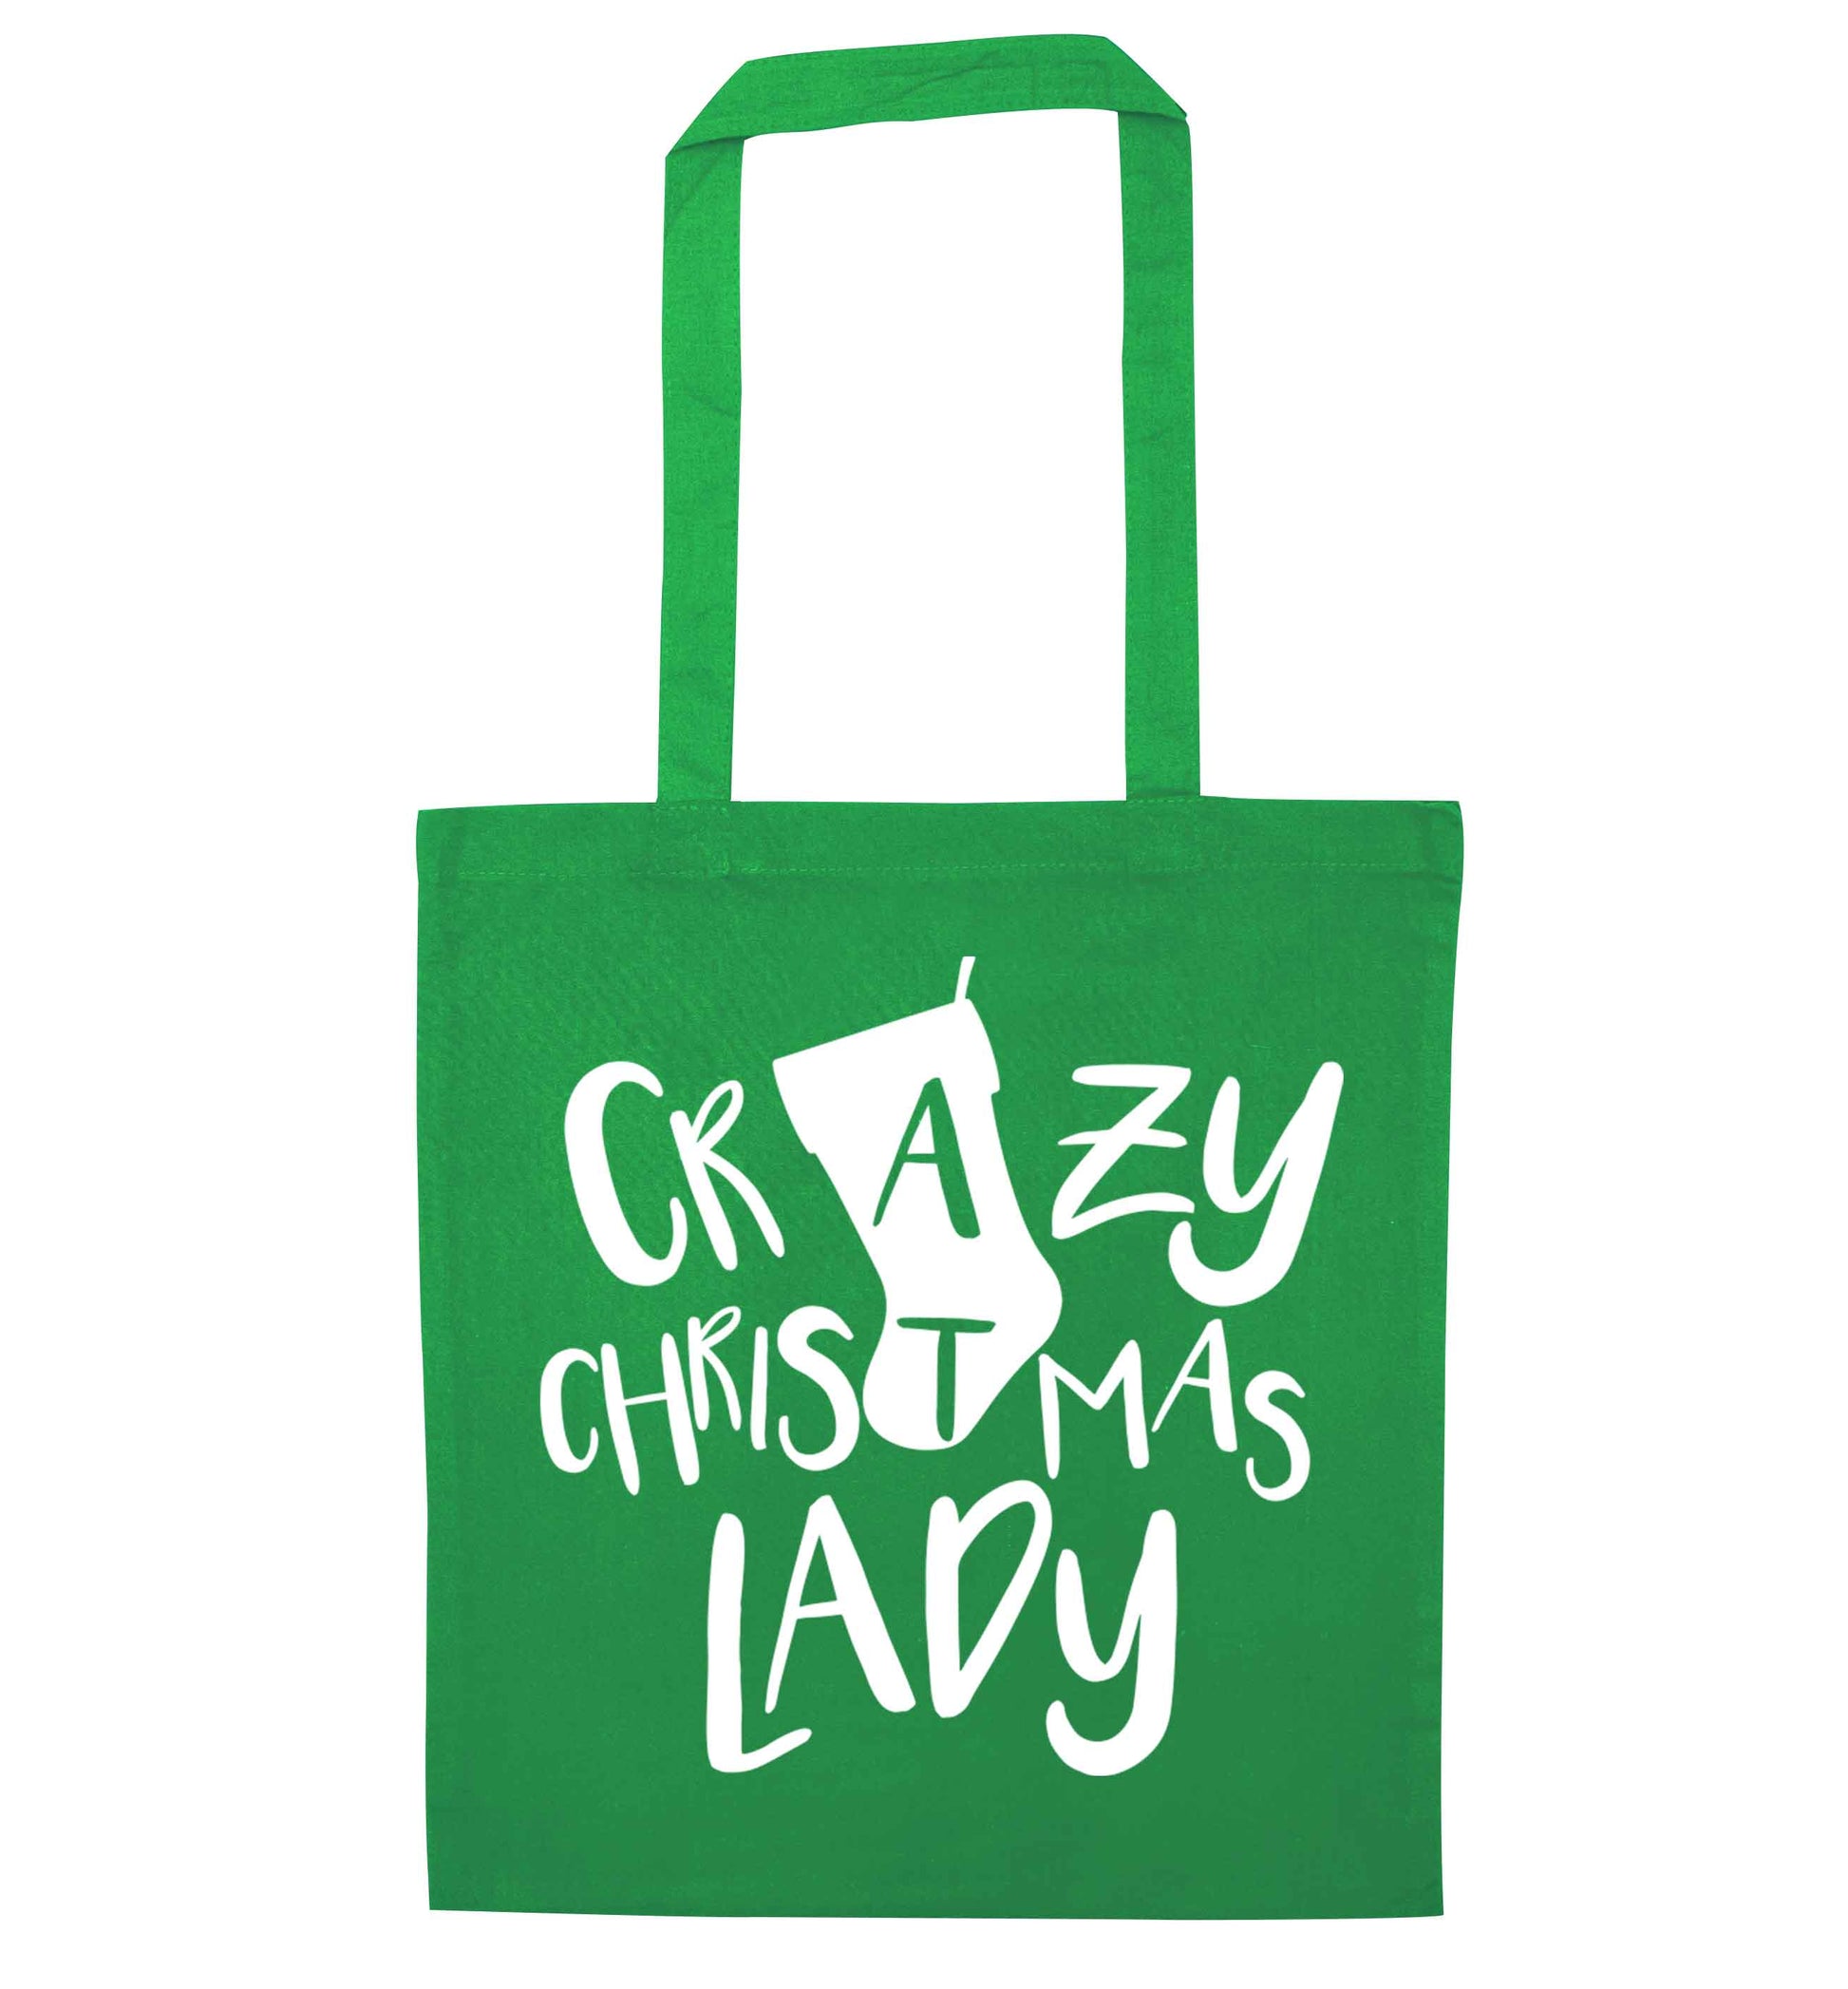 Crazy Christmas Dude green tote bag